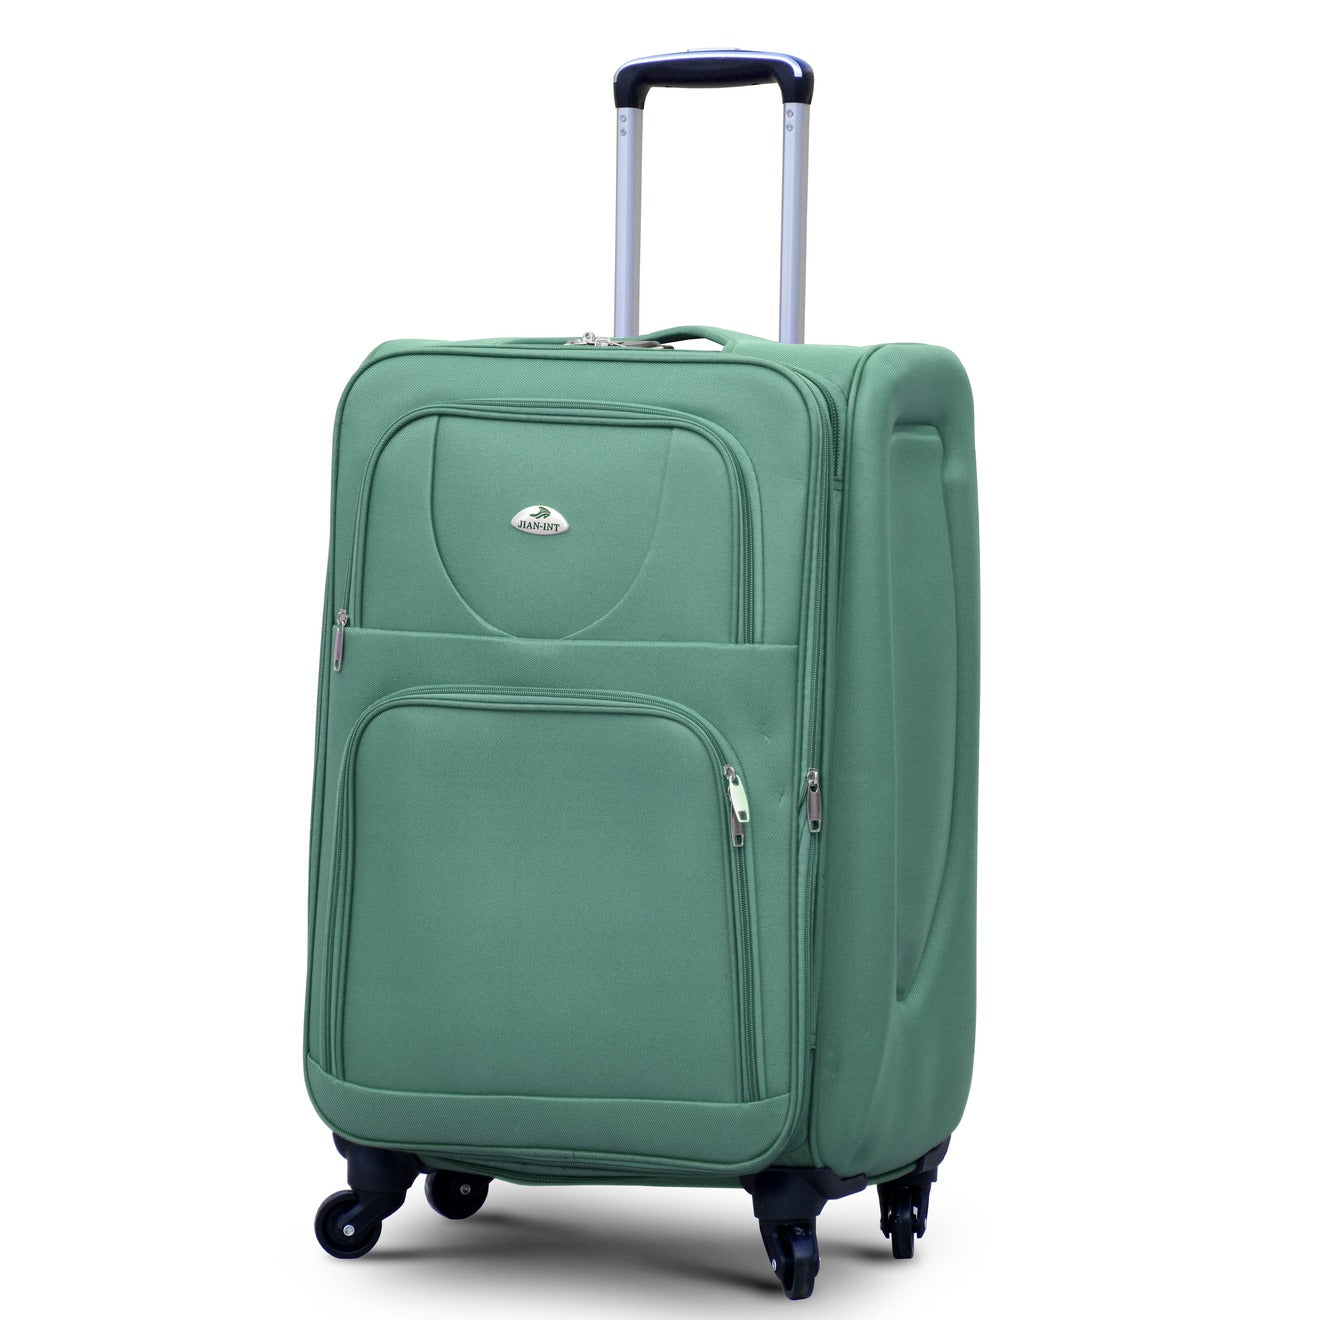 24" Green Colour SJ JIAN 4 Wheel Luggage Lightweight Soft Material Trolley Bag